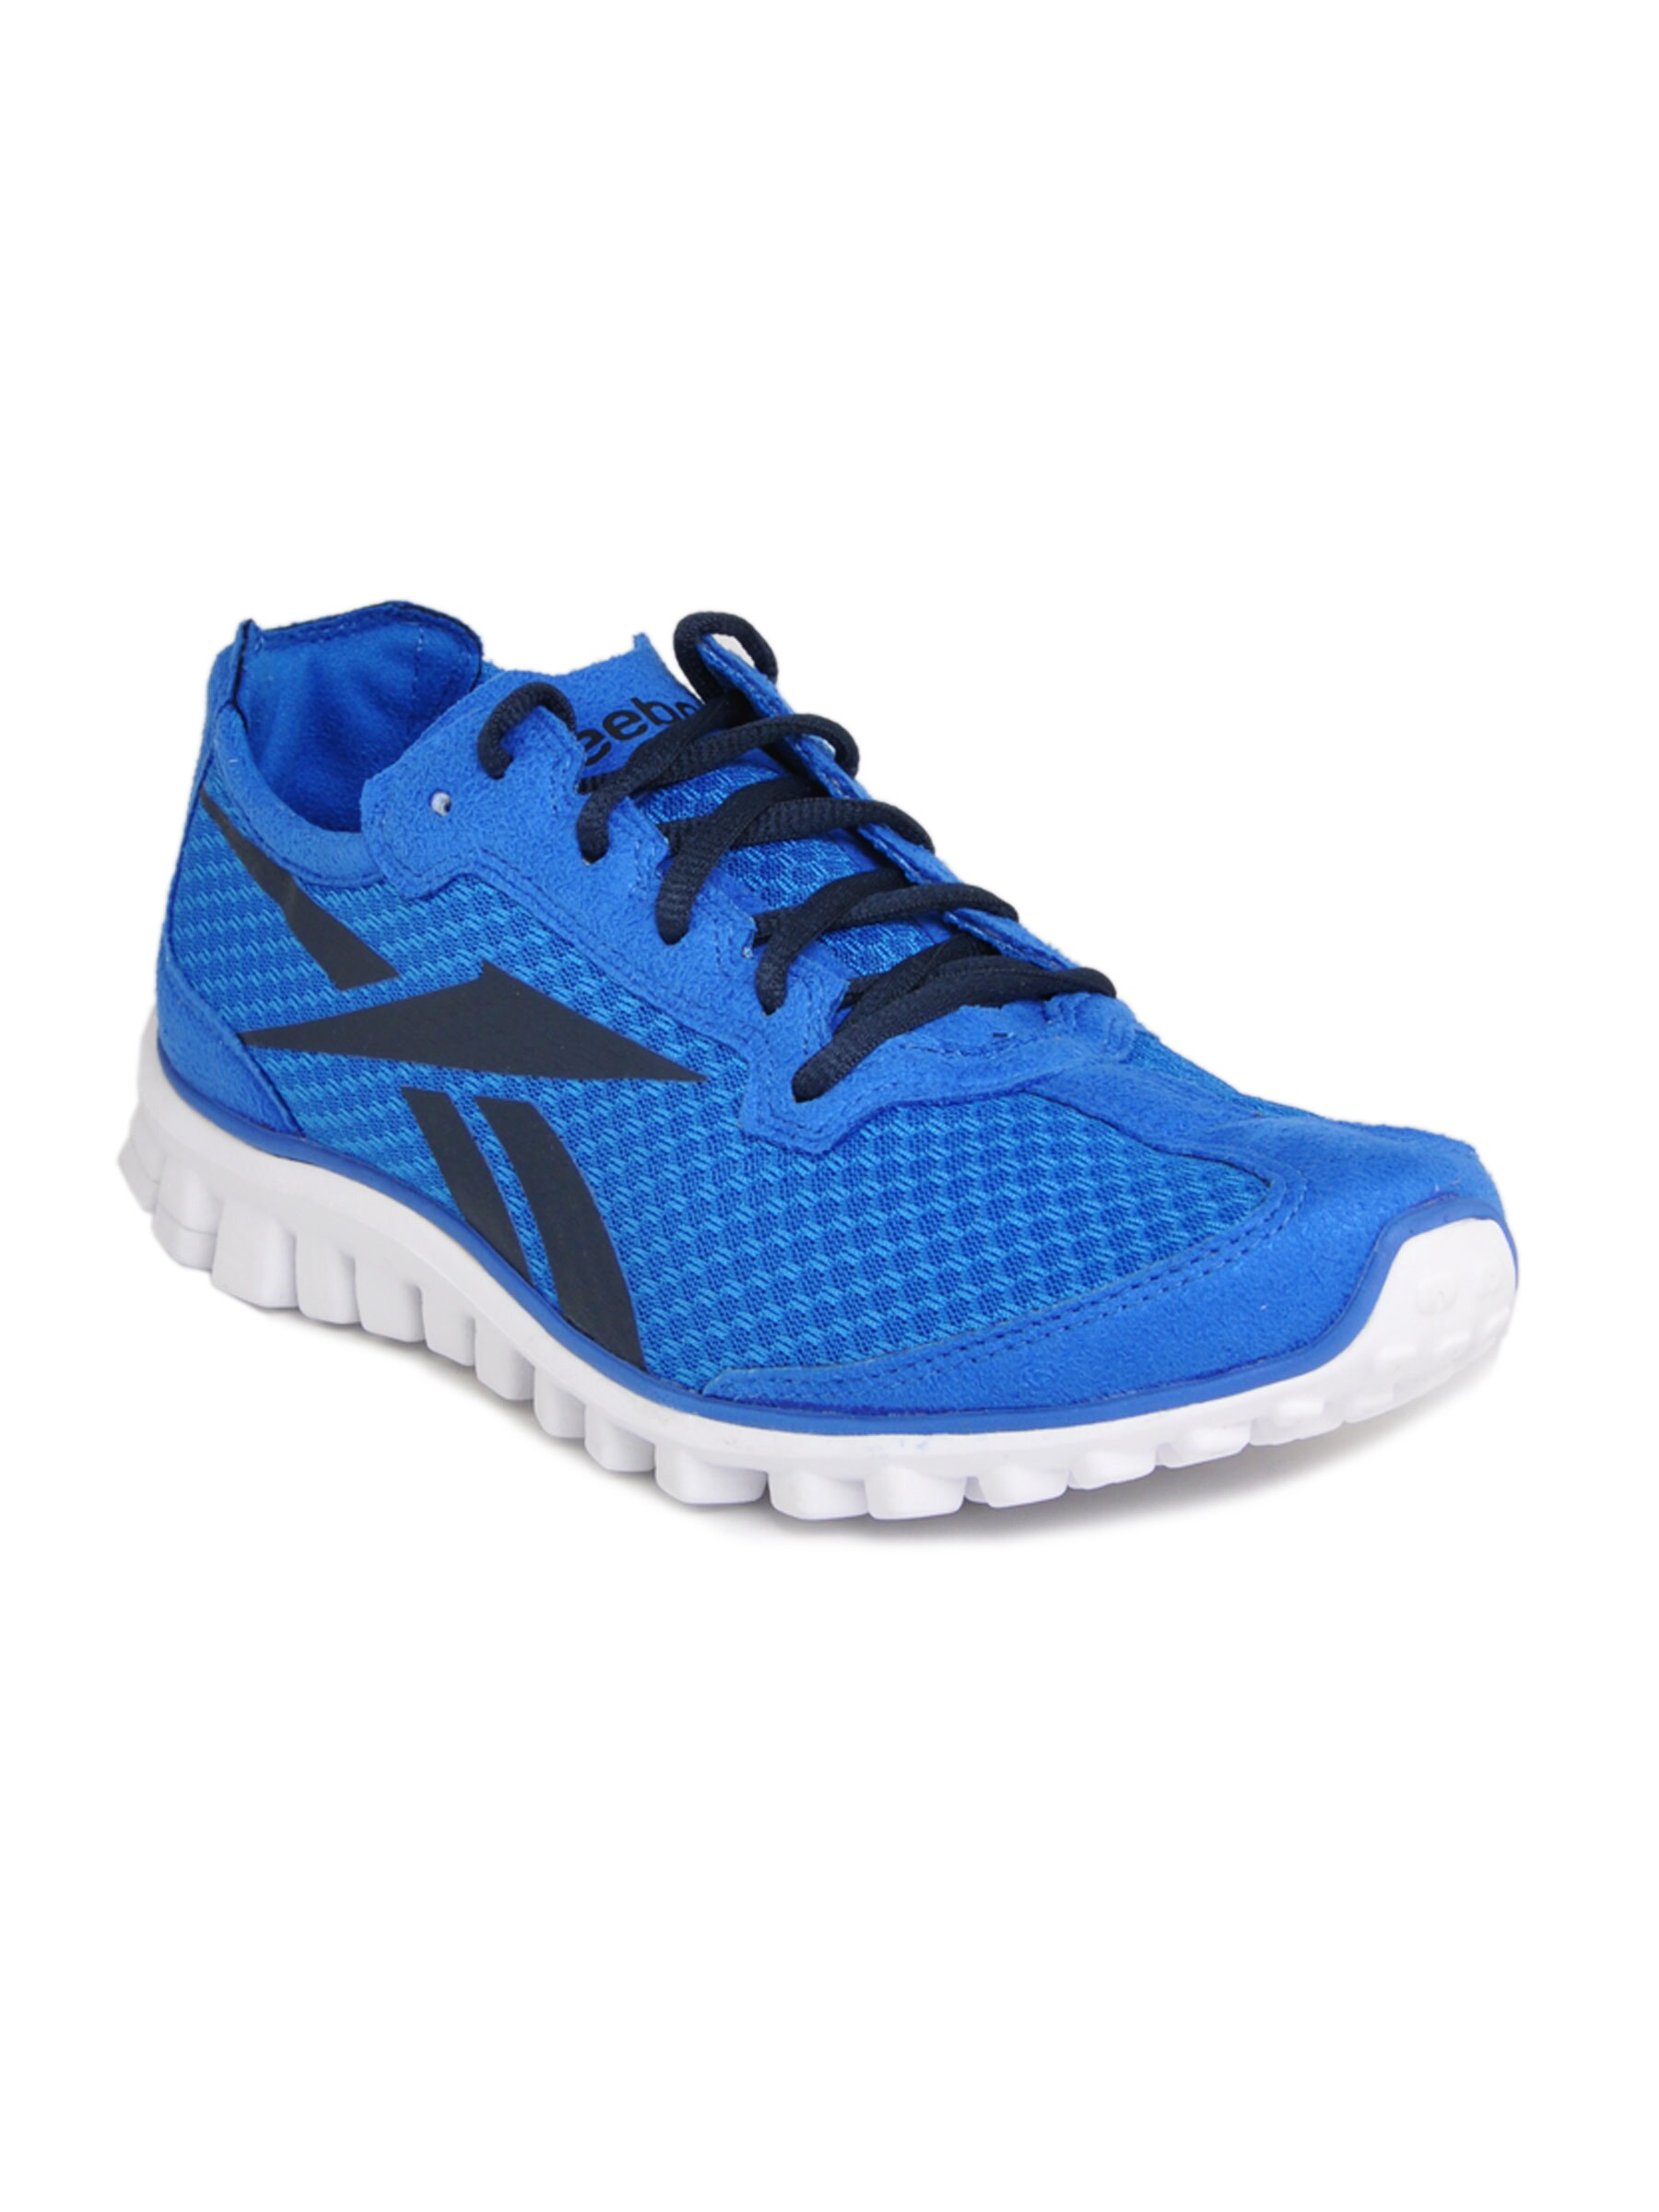 Reebok Men Reeflex Run Blue Sports Shoes